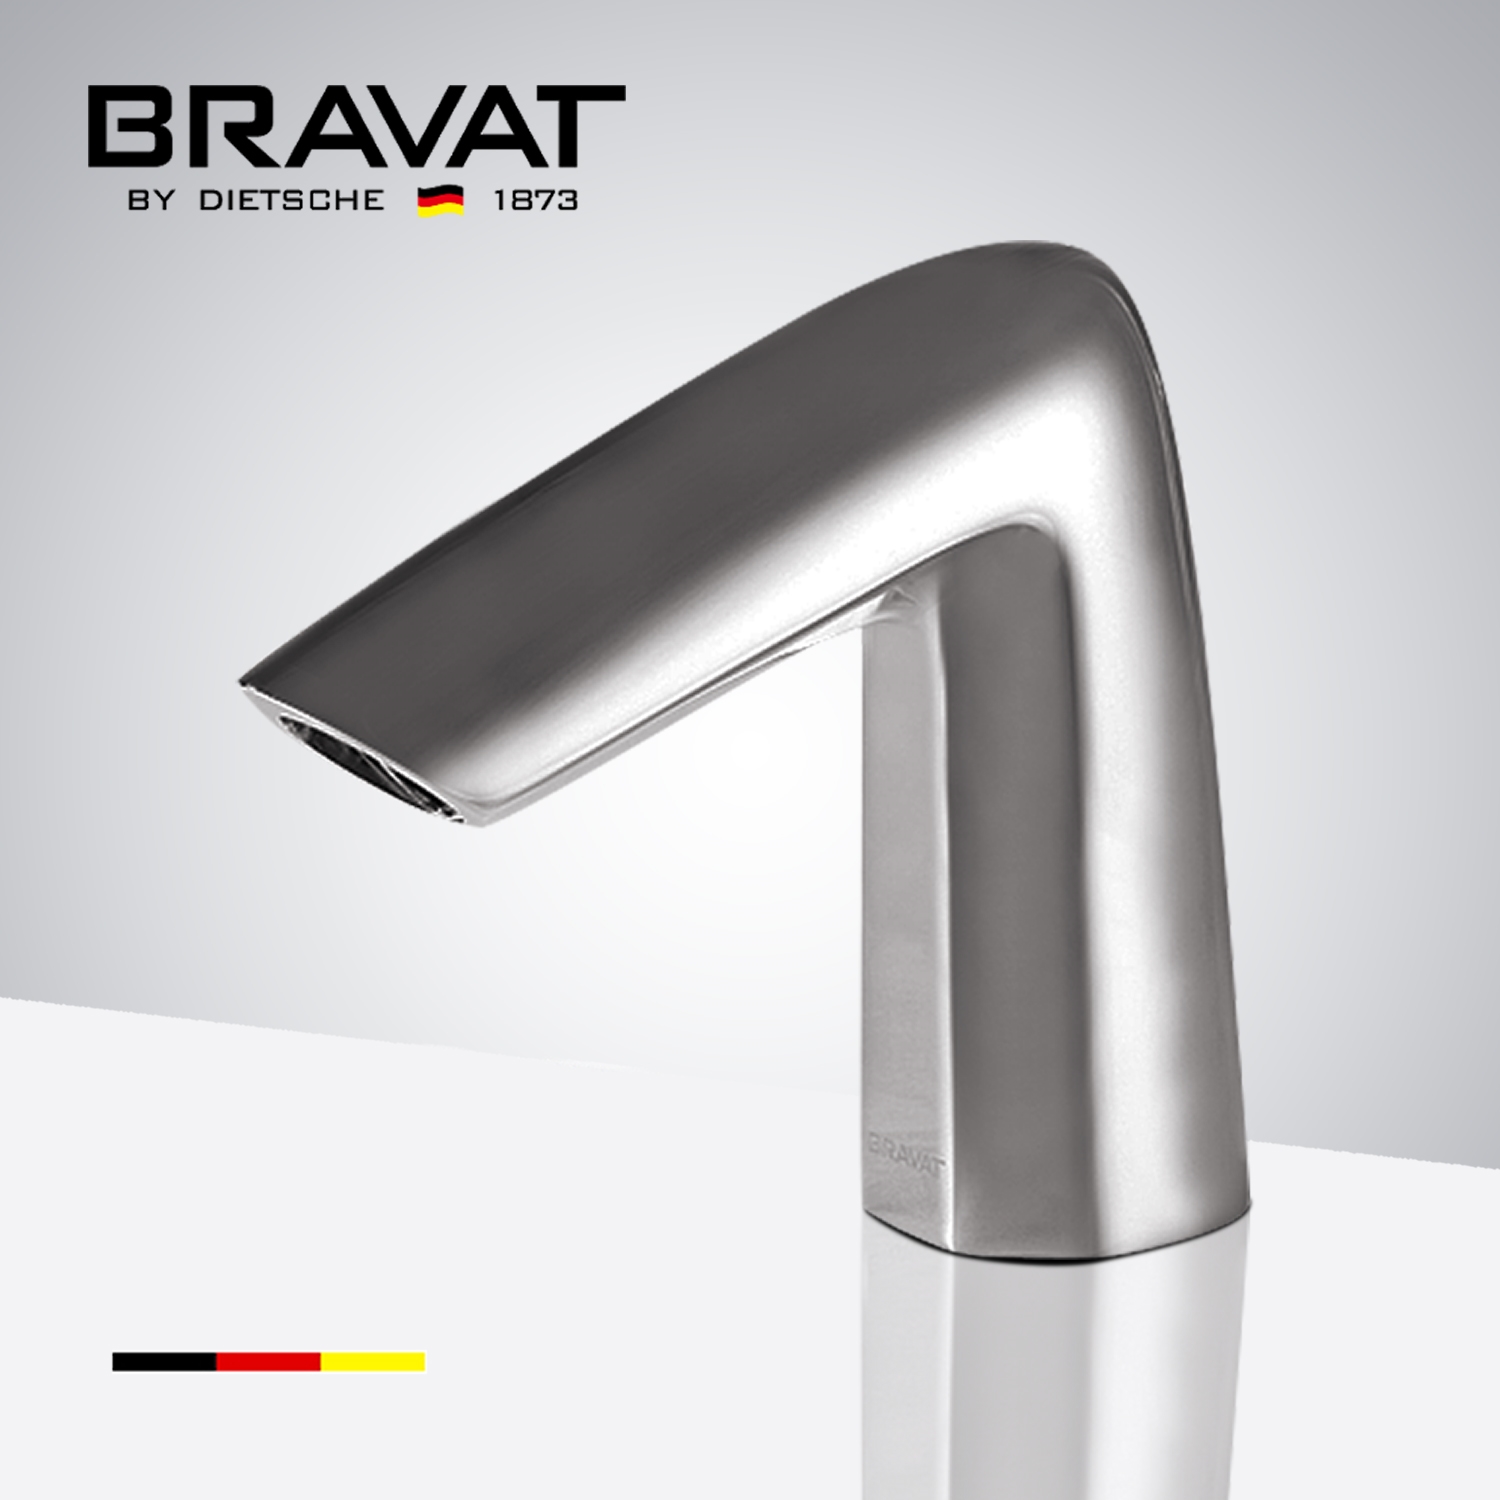 Bravat Brushed Nickel Commercial Deck Mount Automatic Sensor Faucet Installation